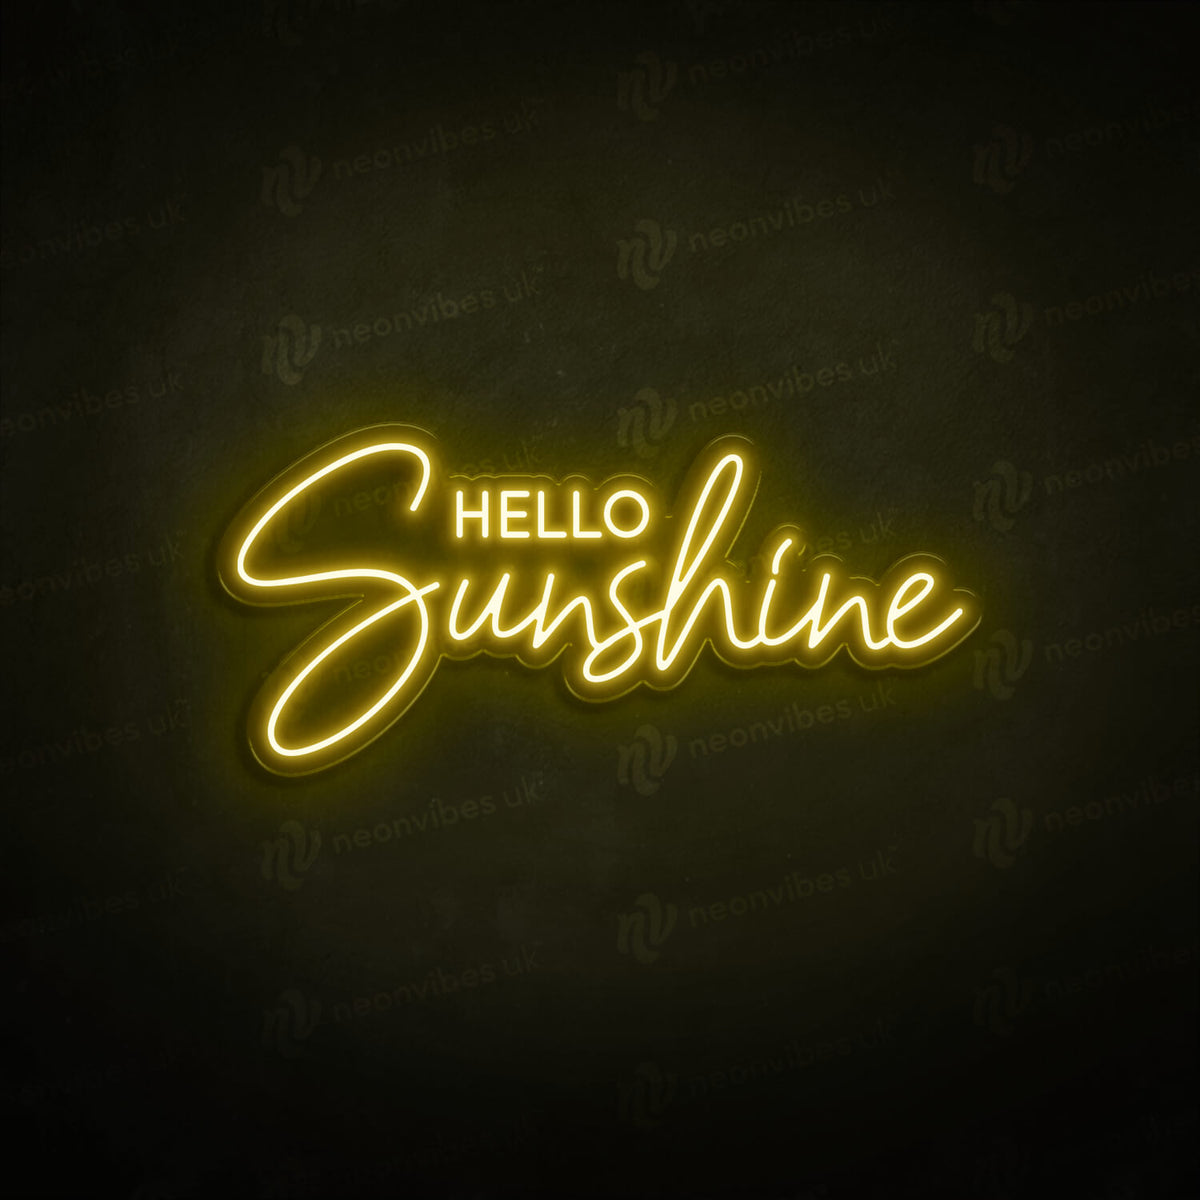 Hello Sunshine neon sign